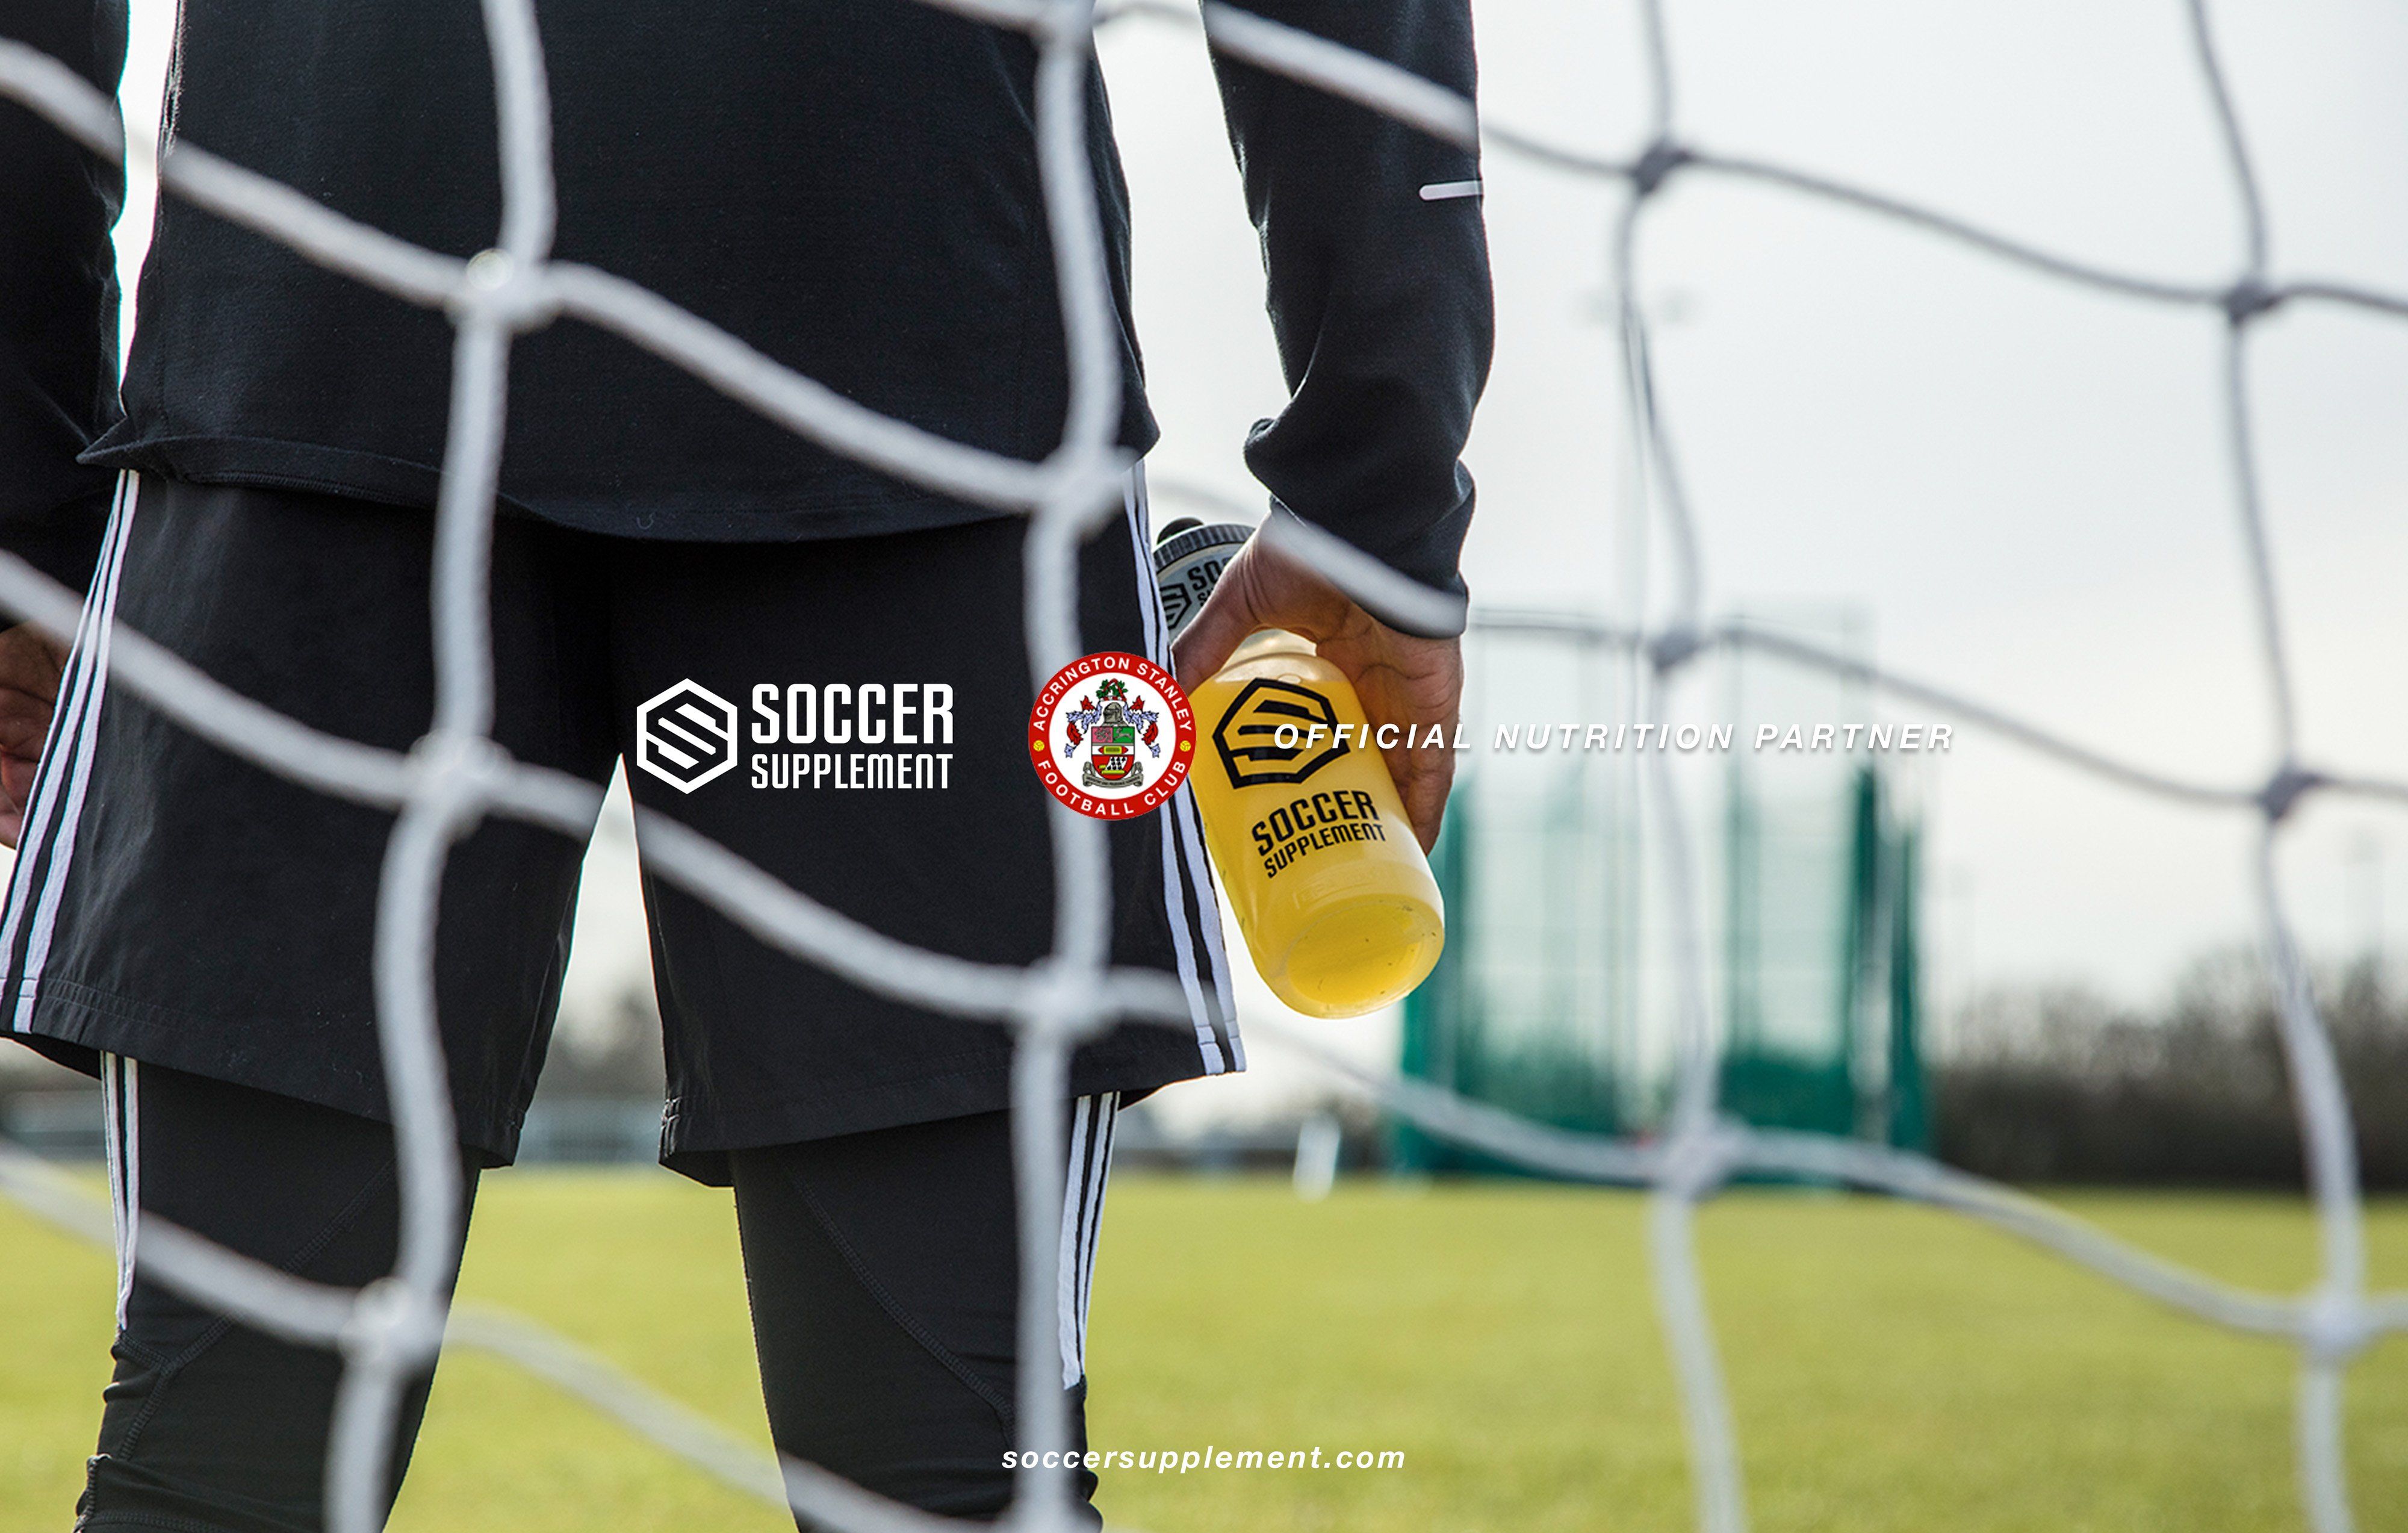 Soccer Supplement become Accrington Stanley’s’ nutrition partner